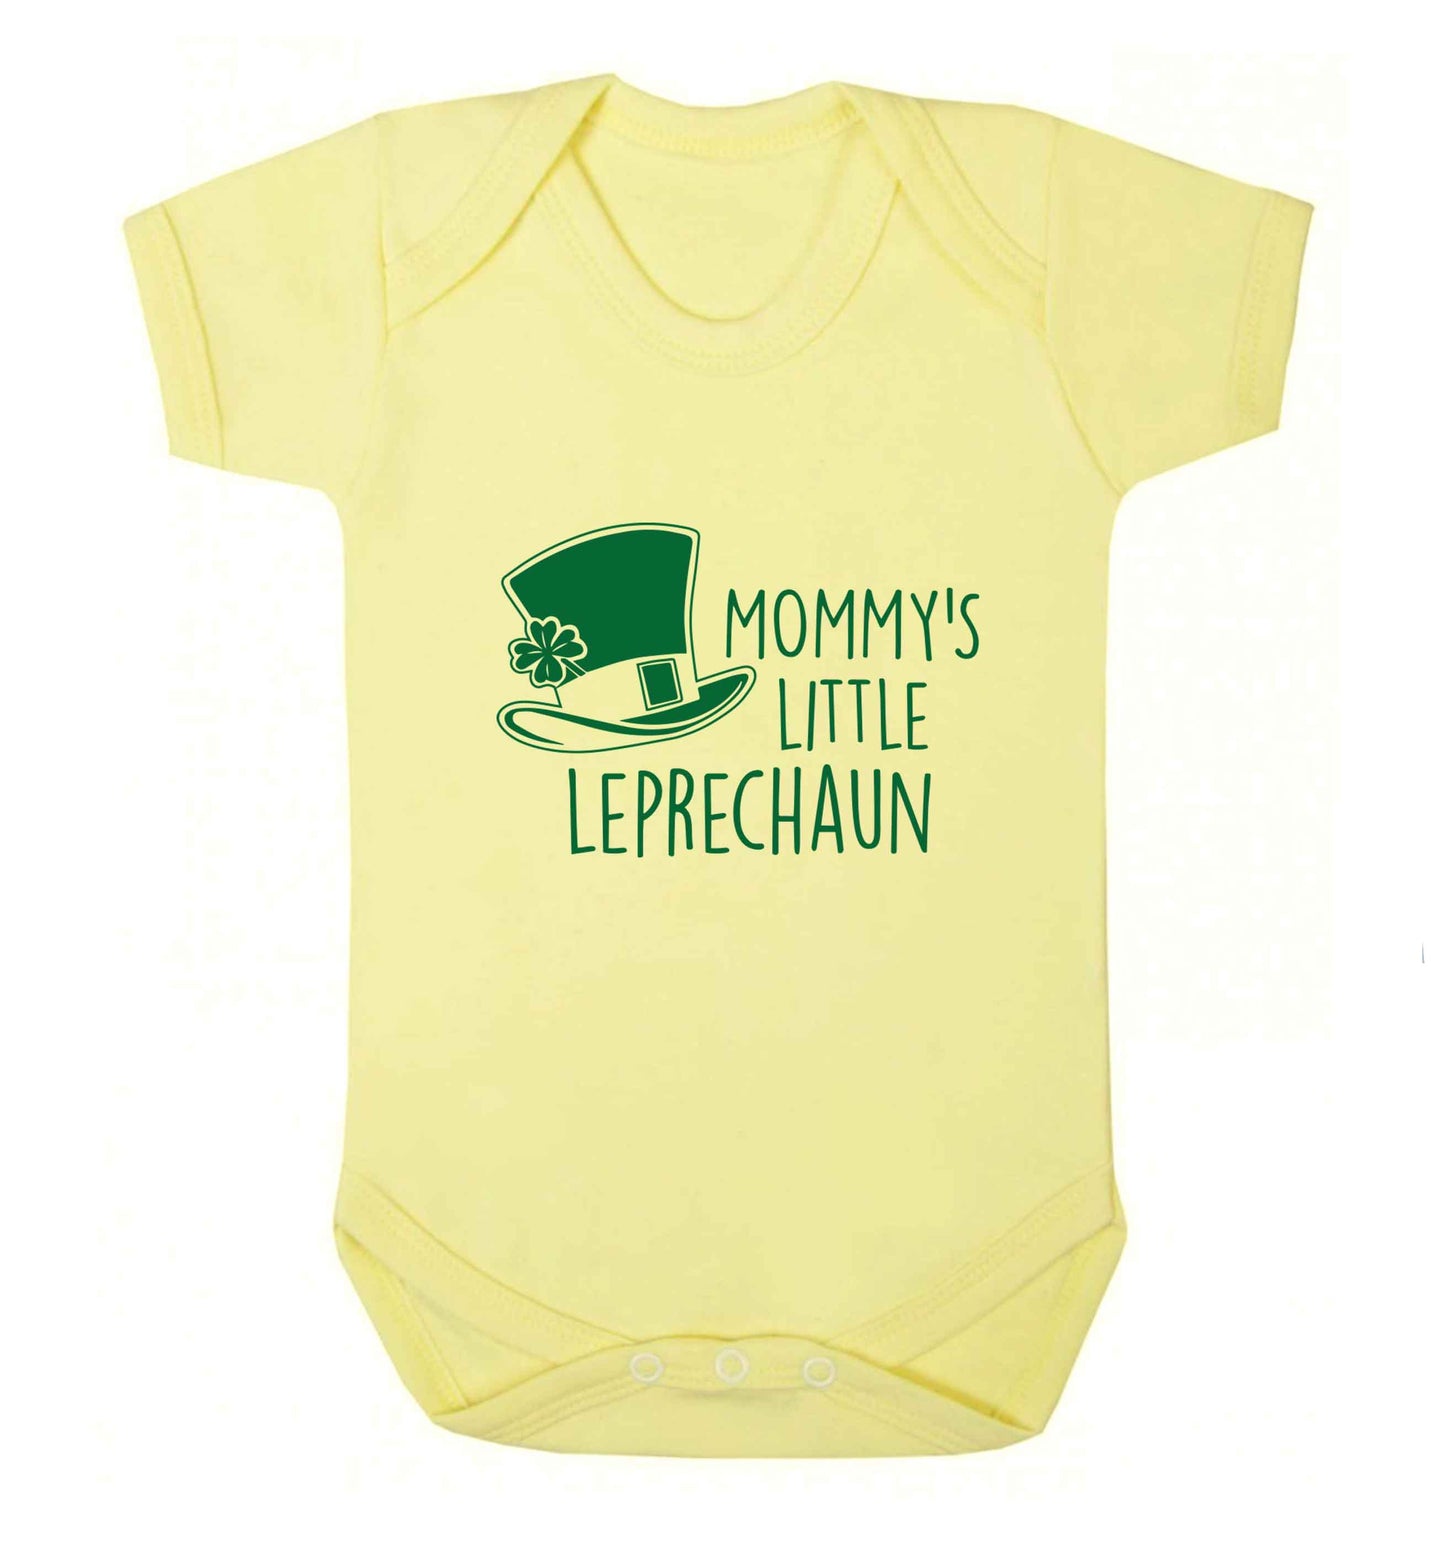 Mommy's little leprechaun baby vest pale yellow 18-24 months